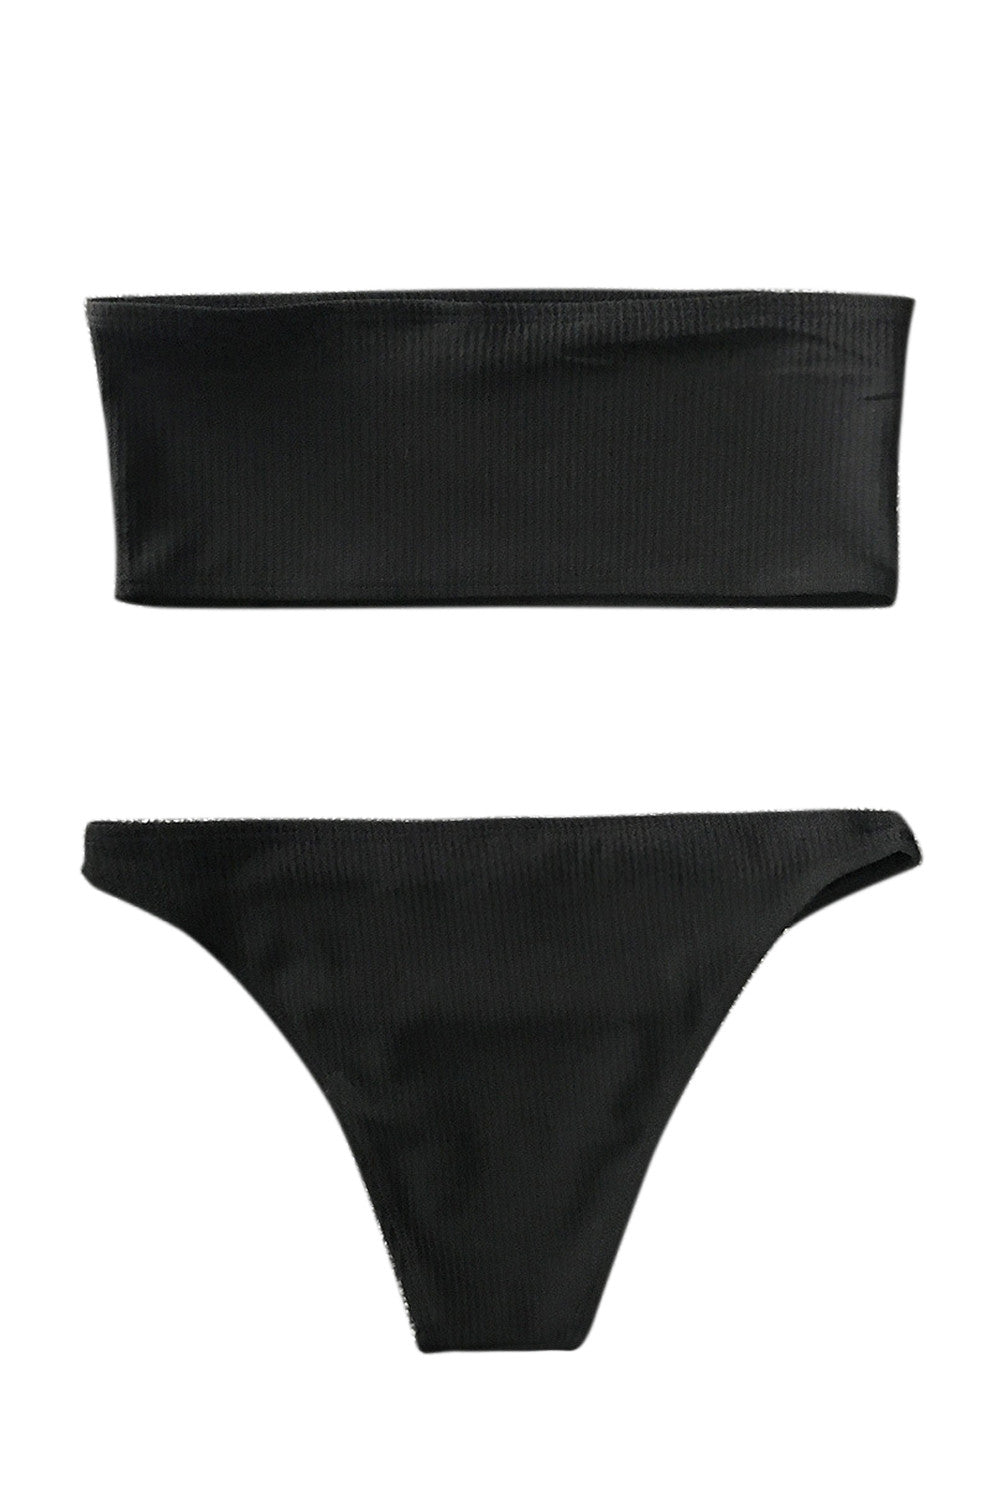 Iyasson Solid Color Rib Knit Strapless Bikini Sets